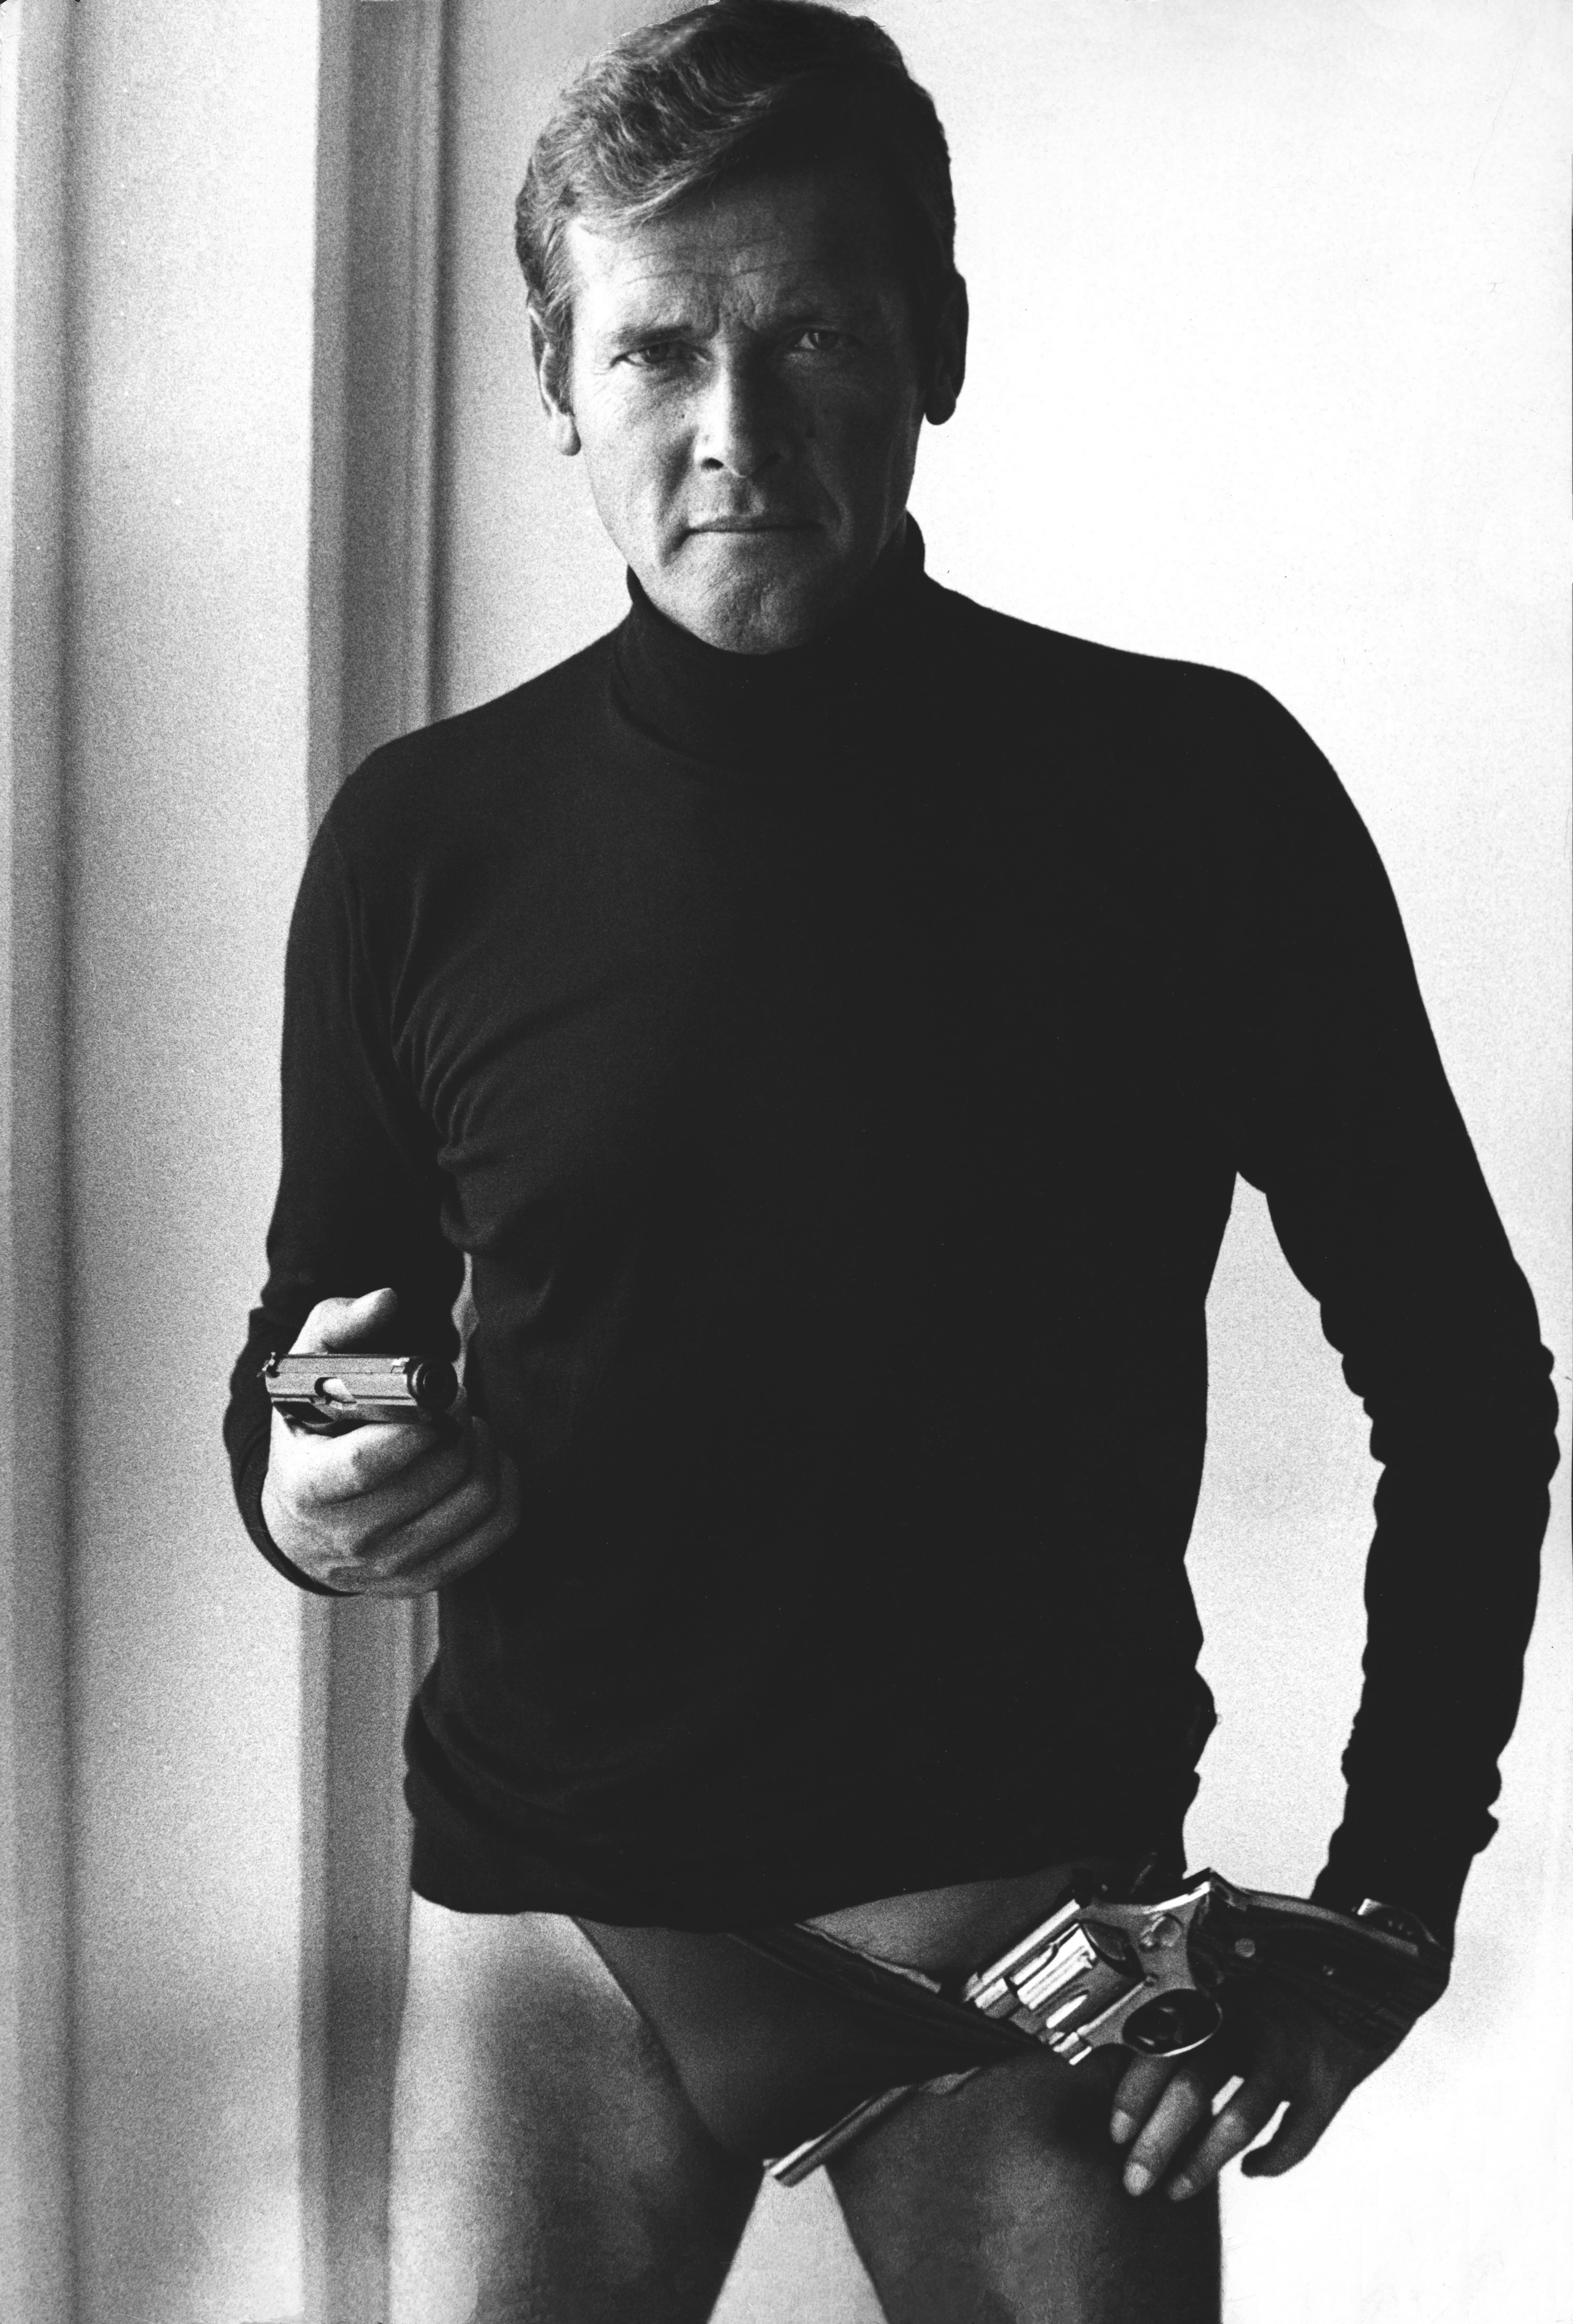 John Bryson Portrait Photograph - Roger Moore as James Bond With Gun in Underwear Fine Art Print